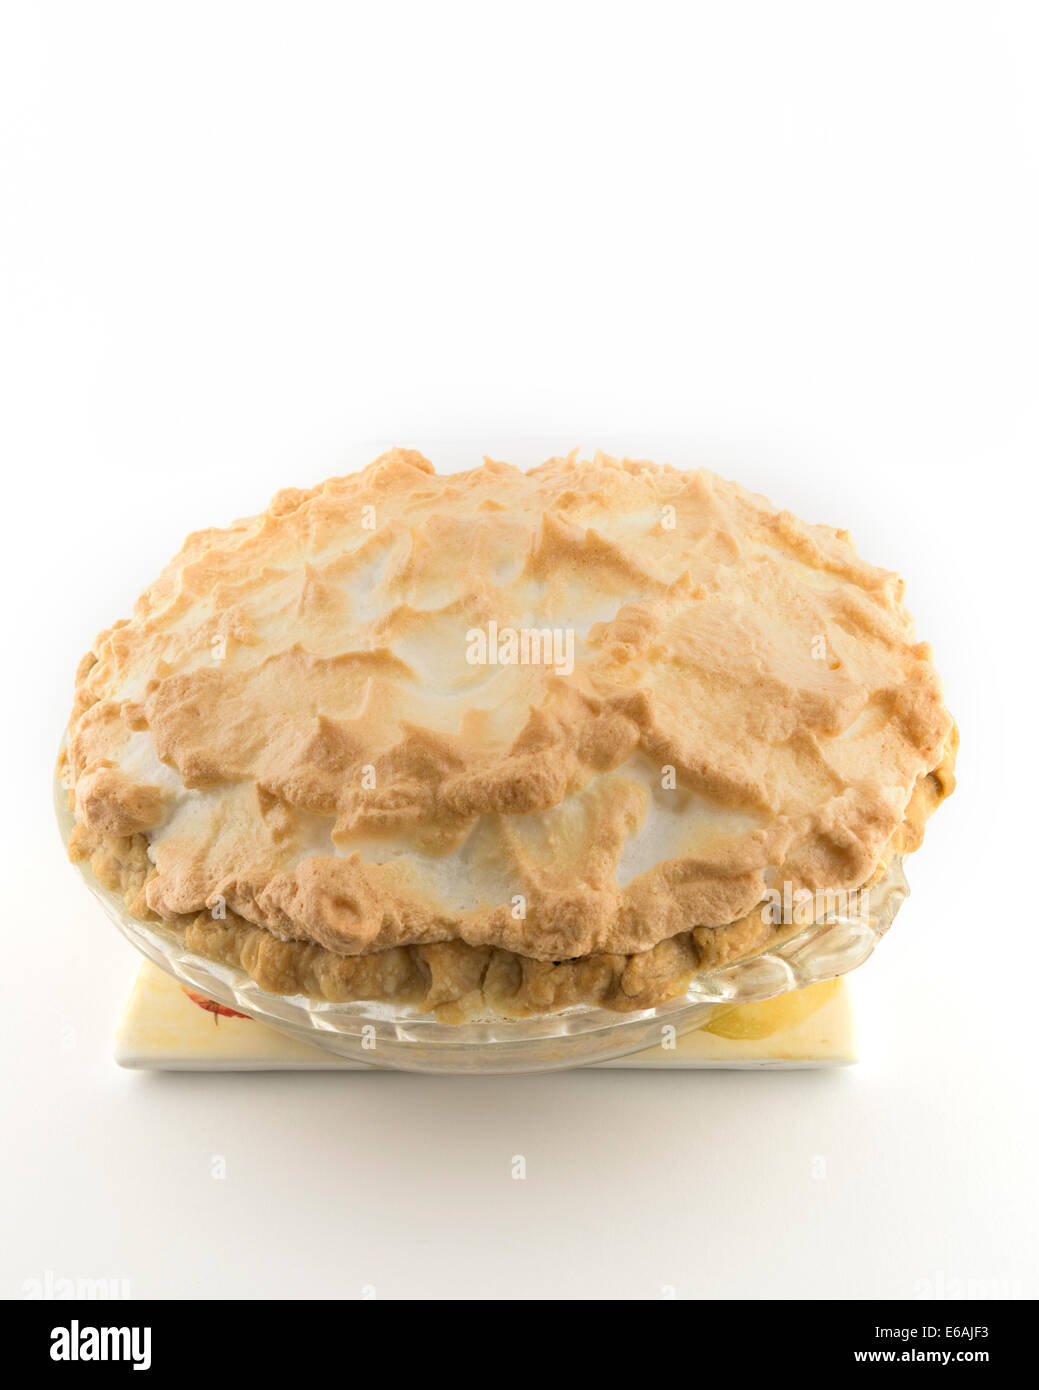 A whole freshly baked homemade chocolate cream meringue pie, cutout, white background. USA Stock Photo